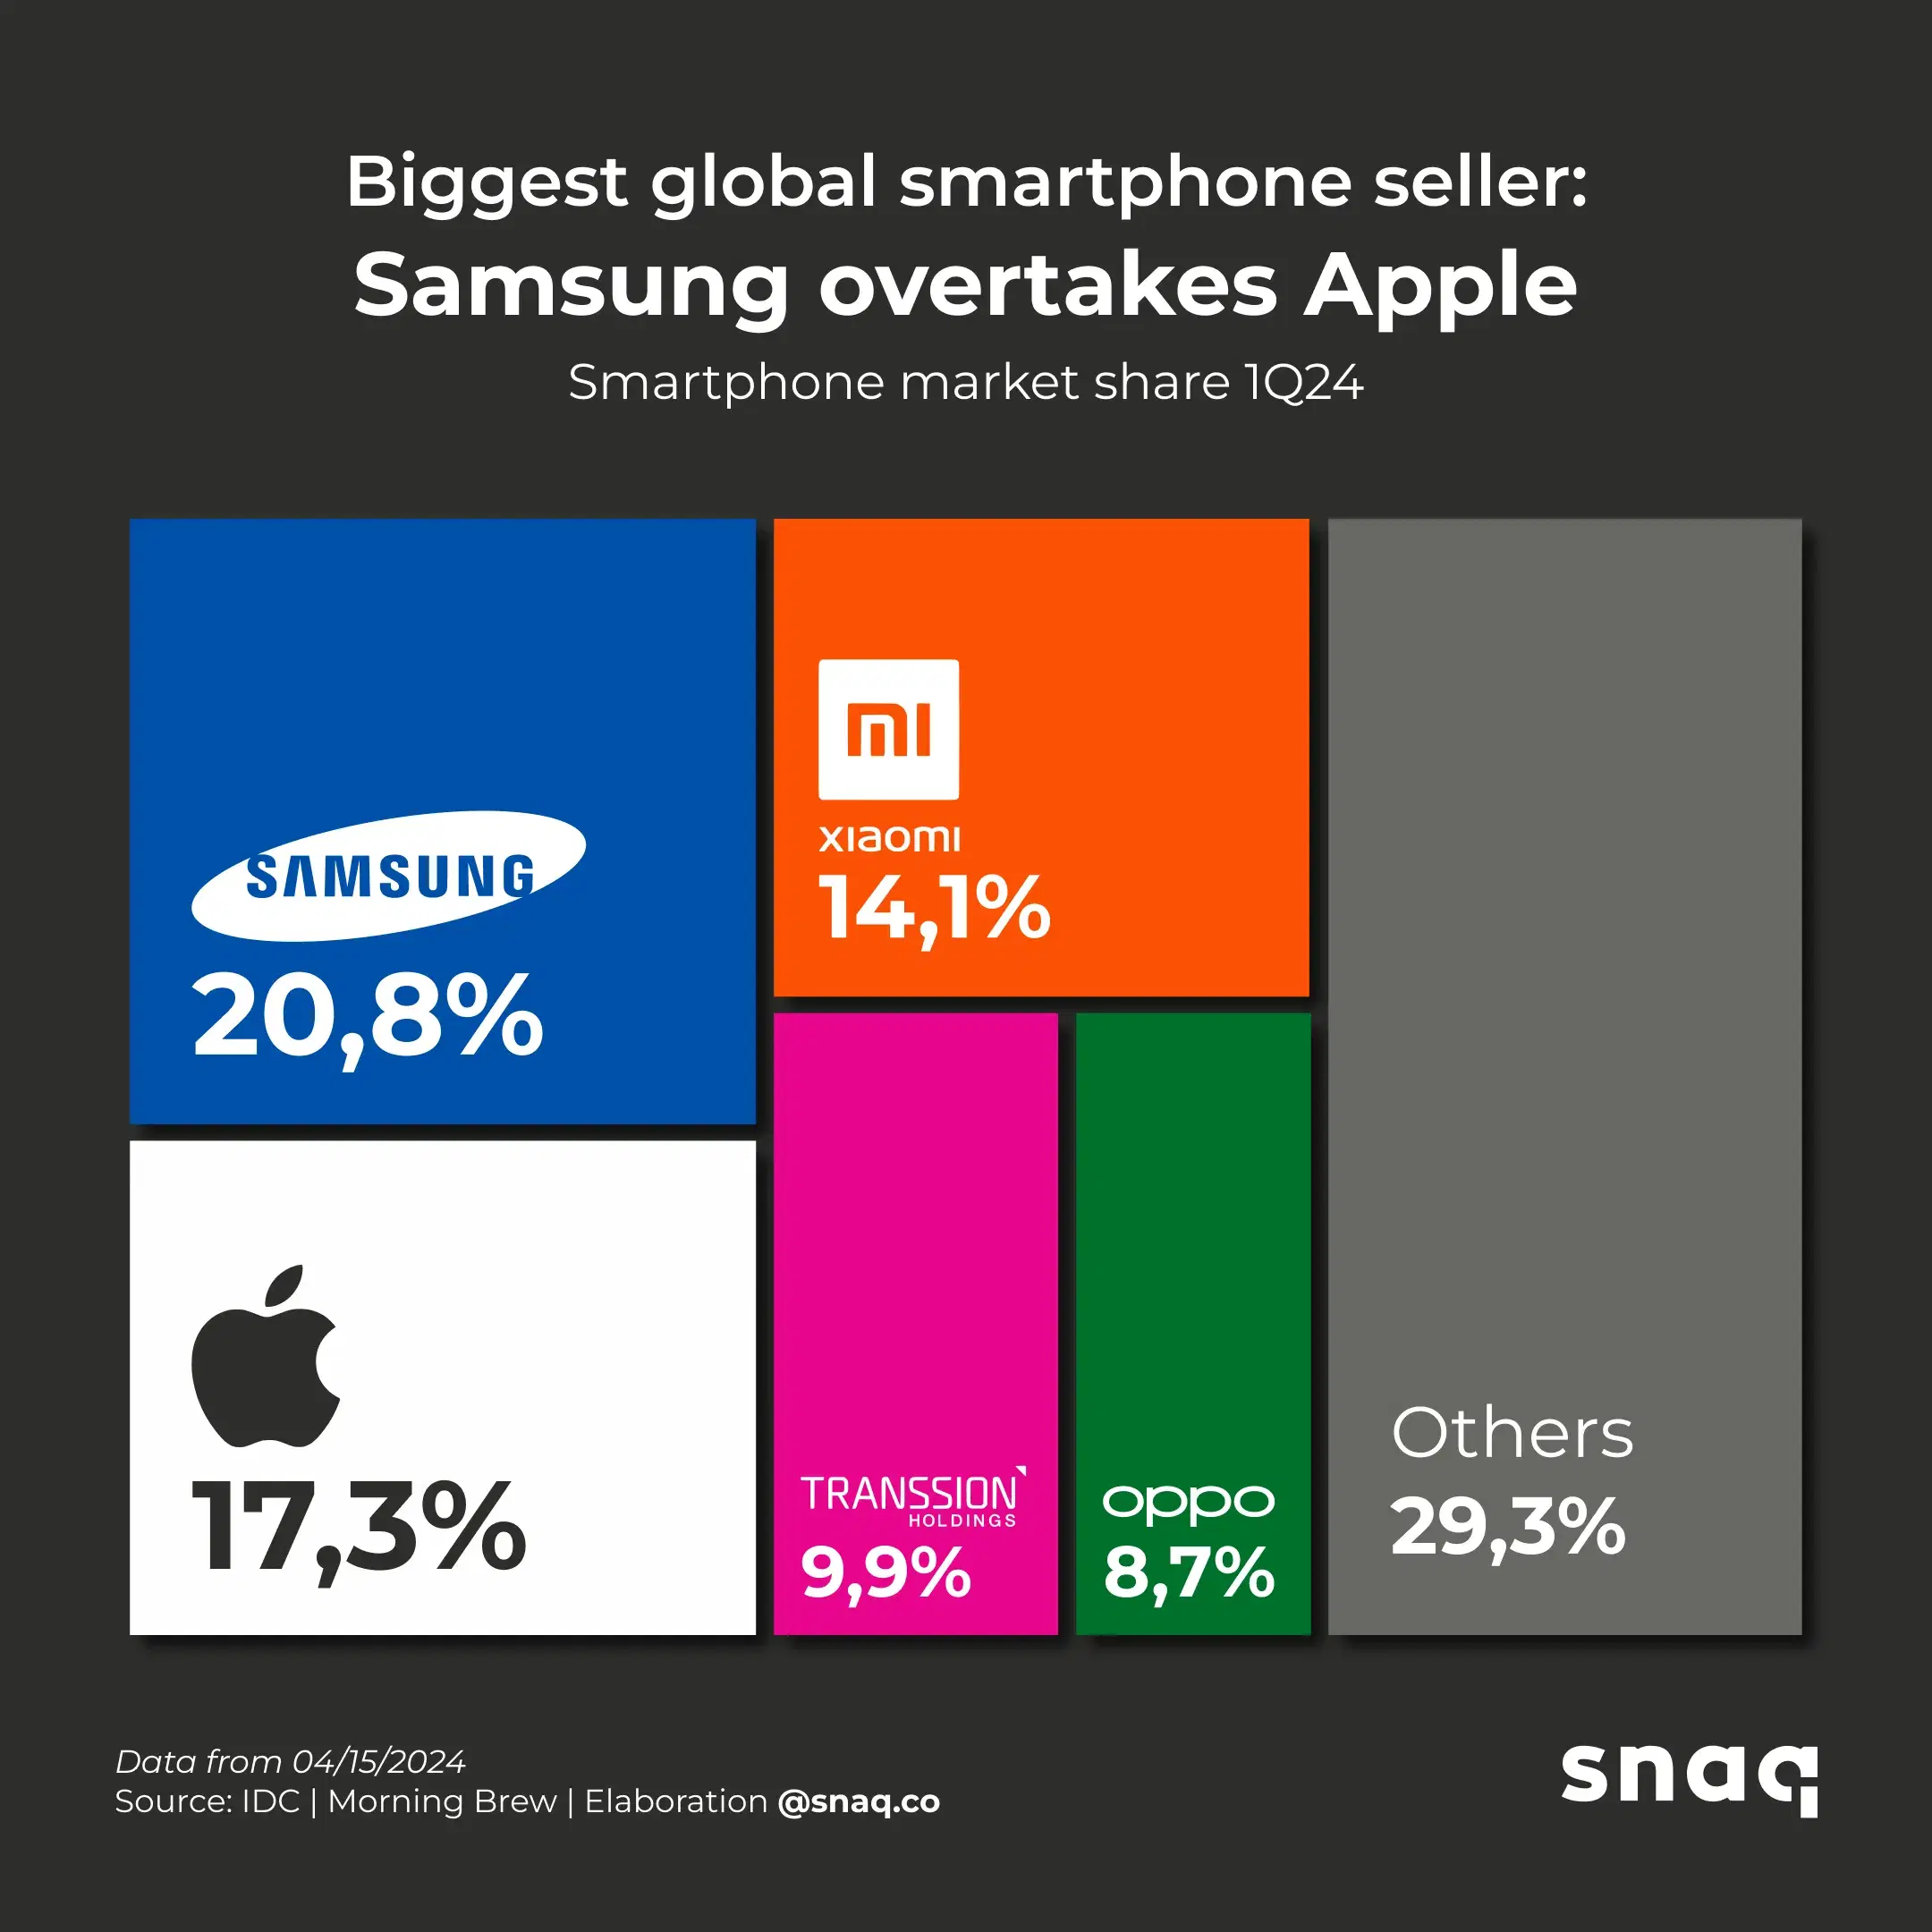 Samsung overtakes Apple